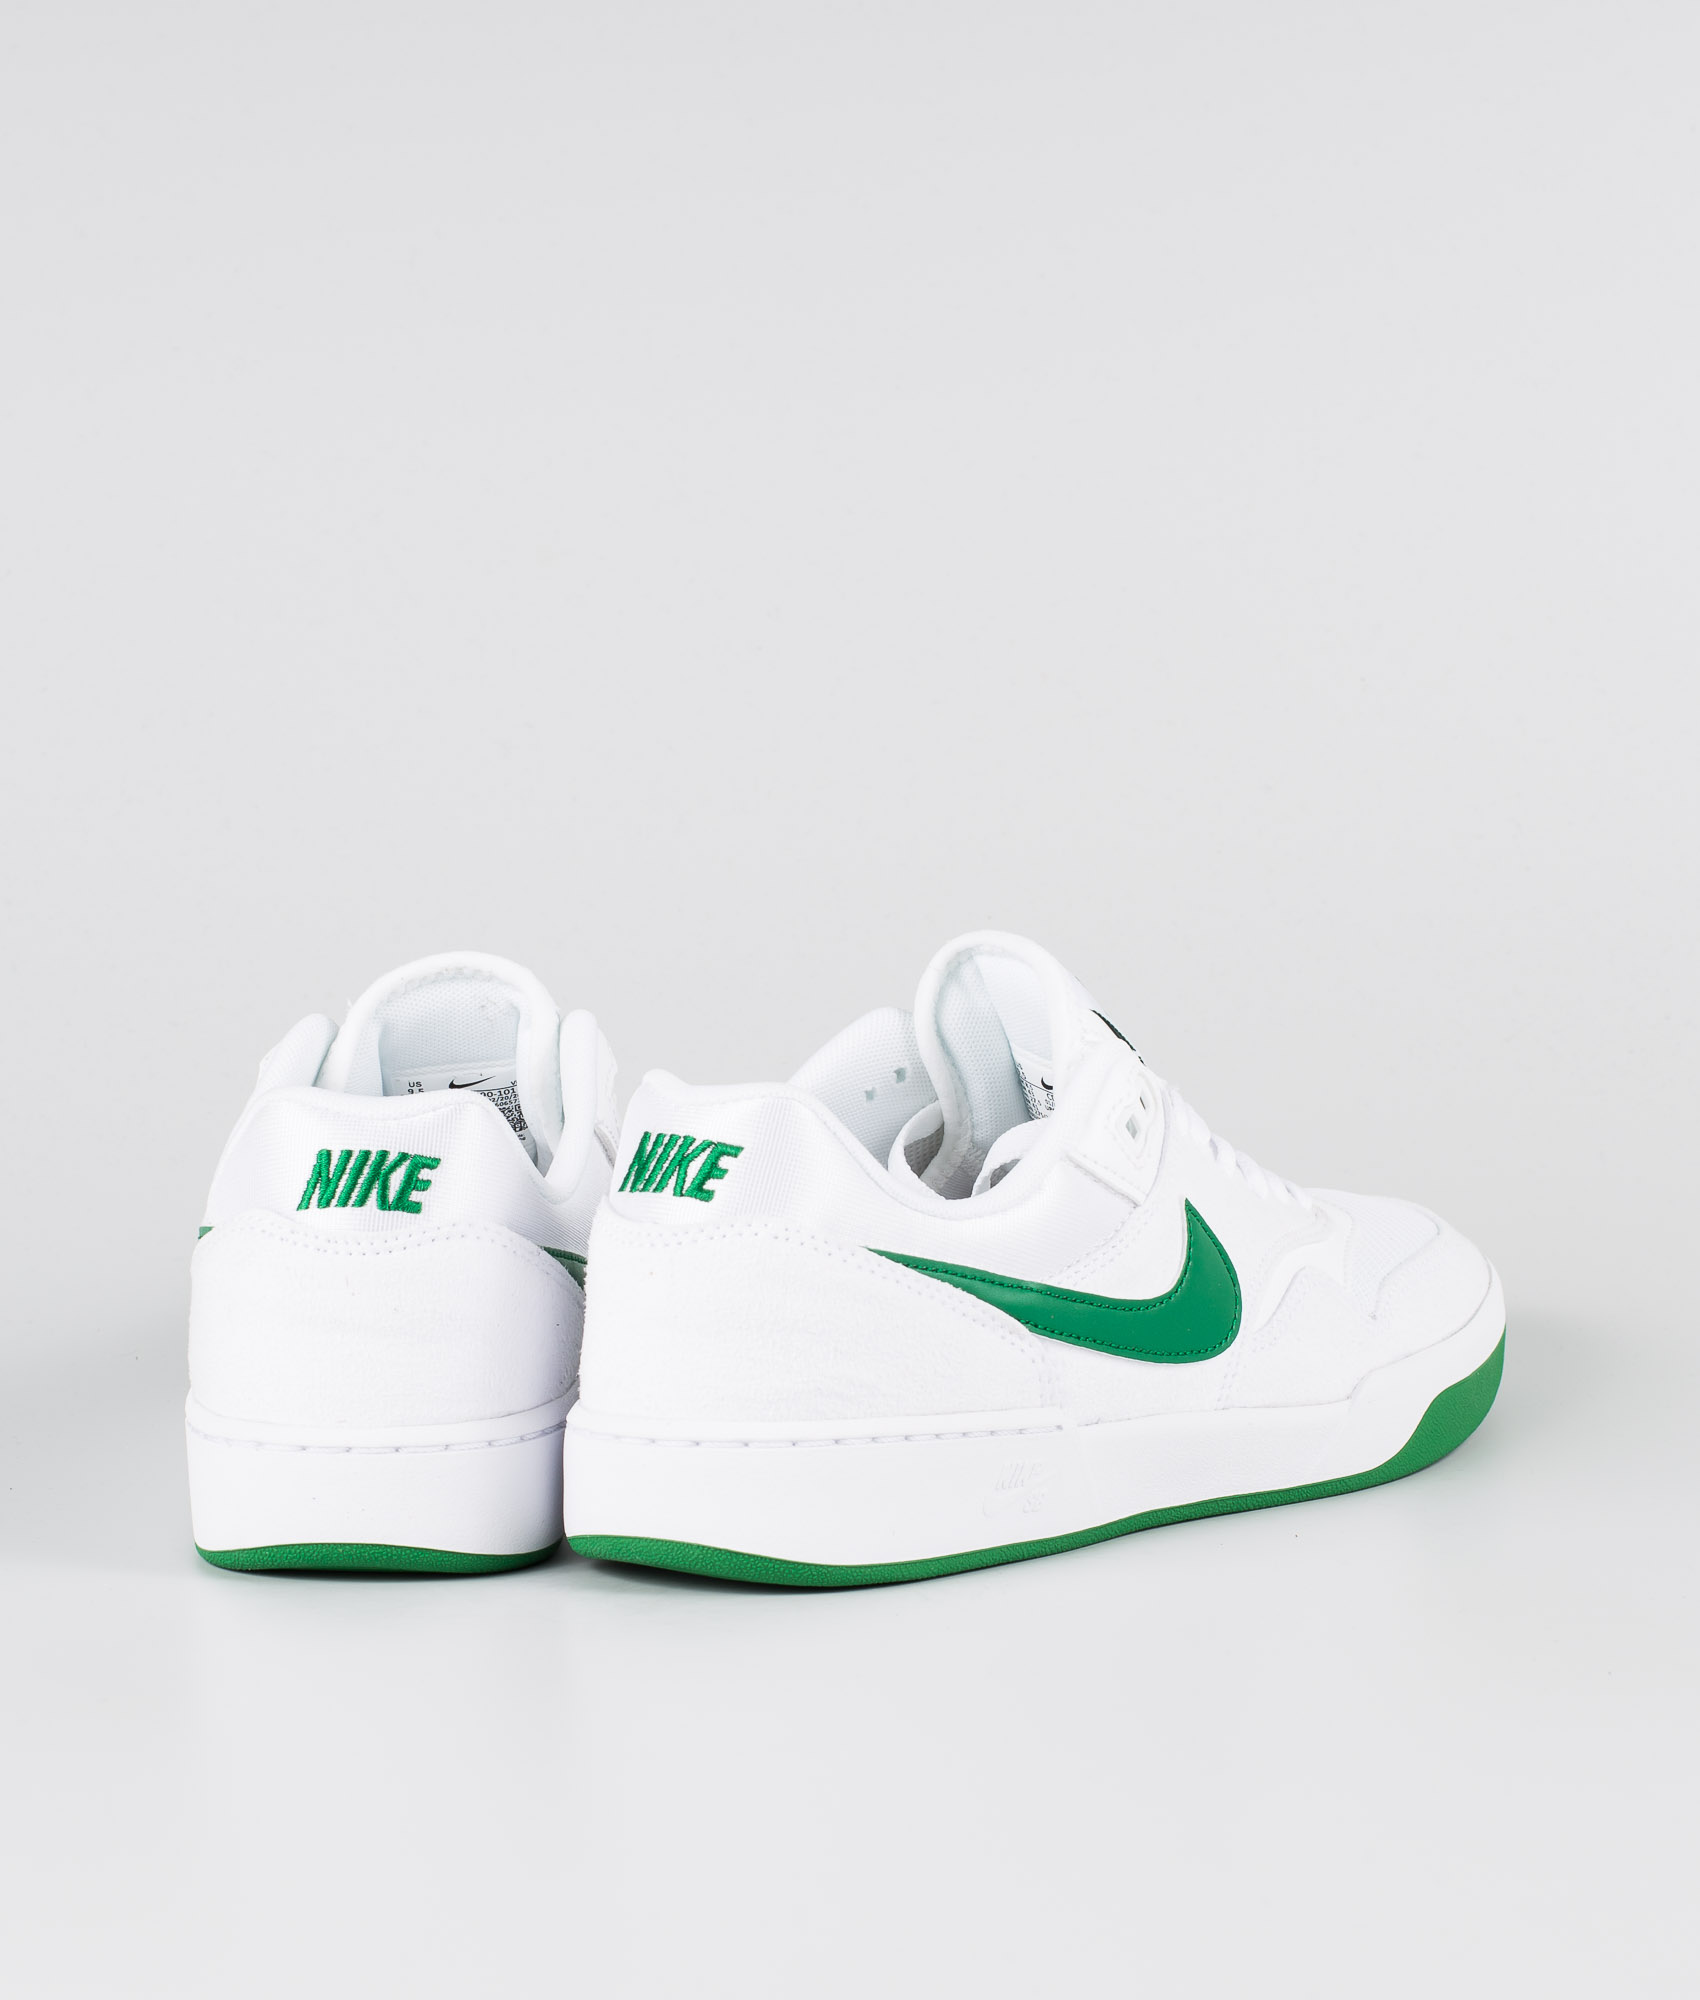 nike white green shoes